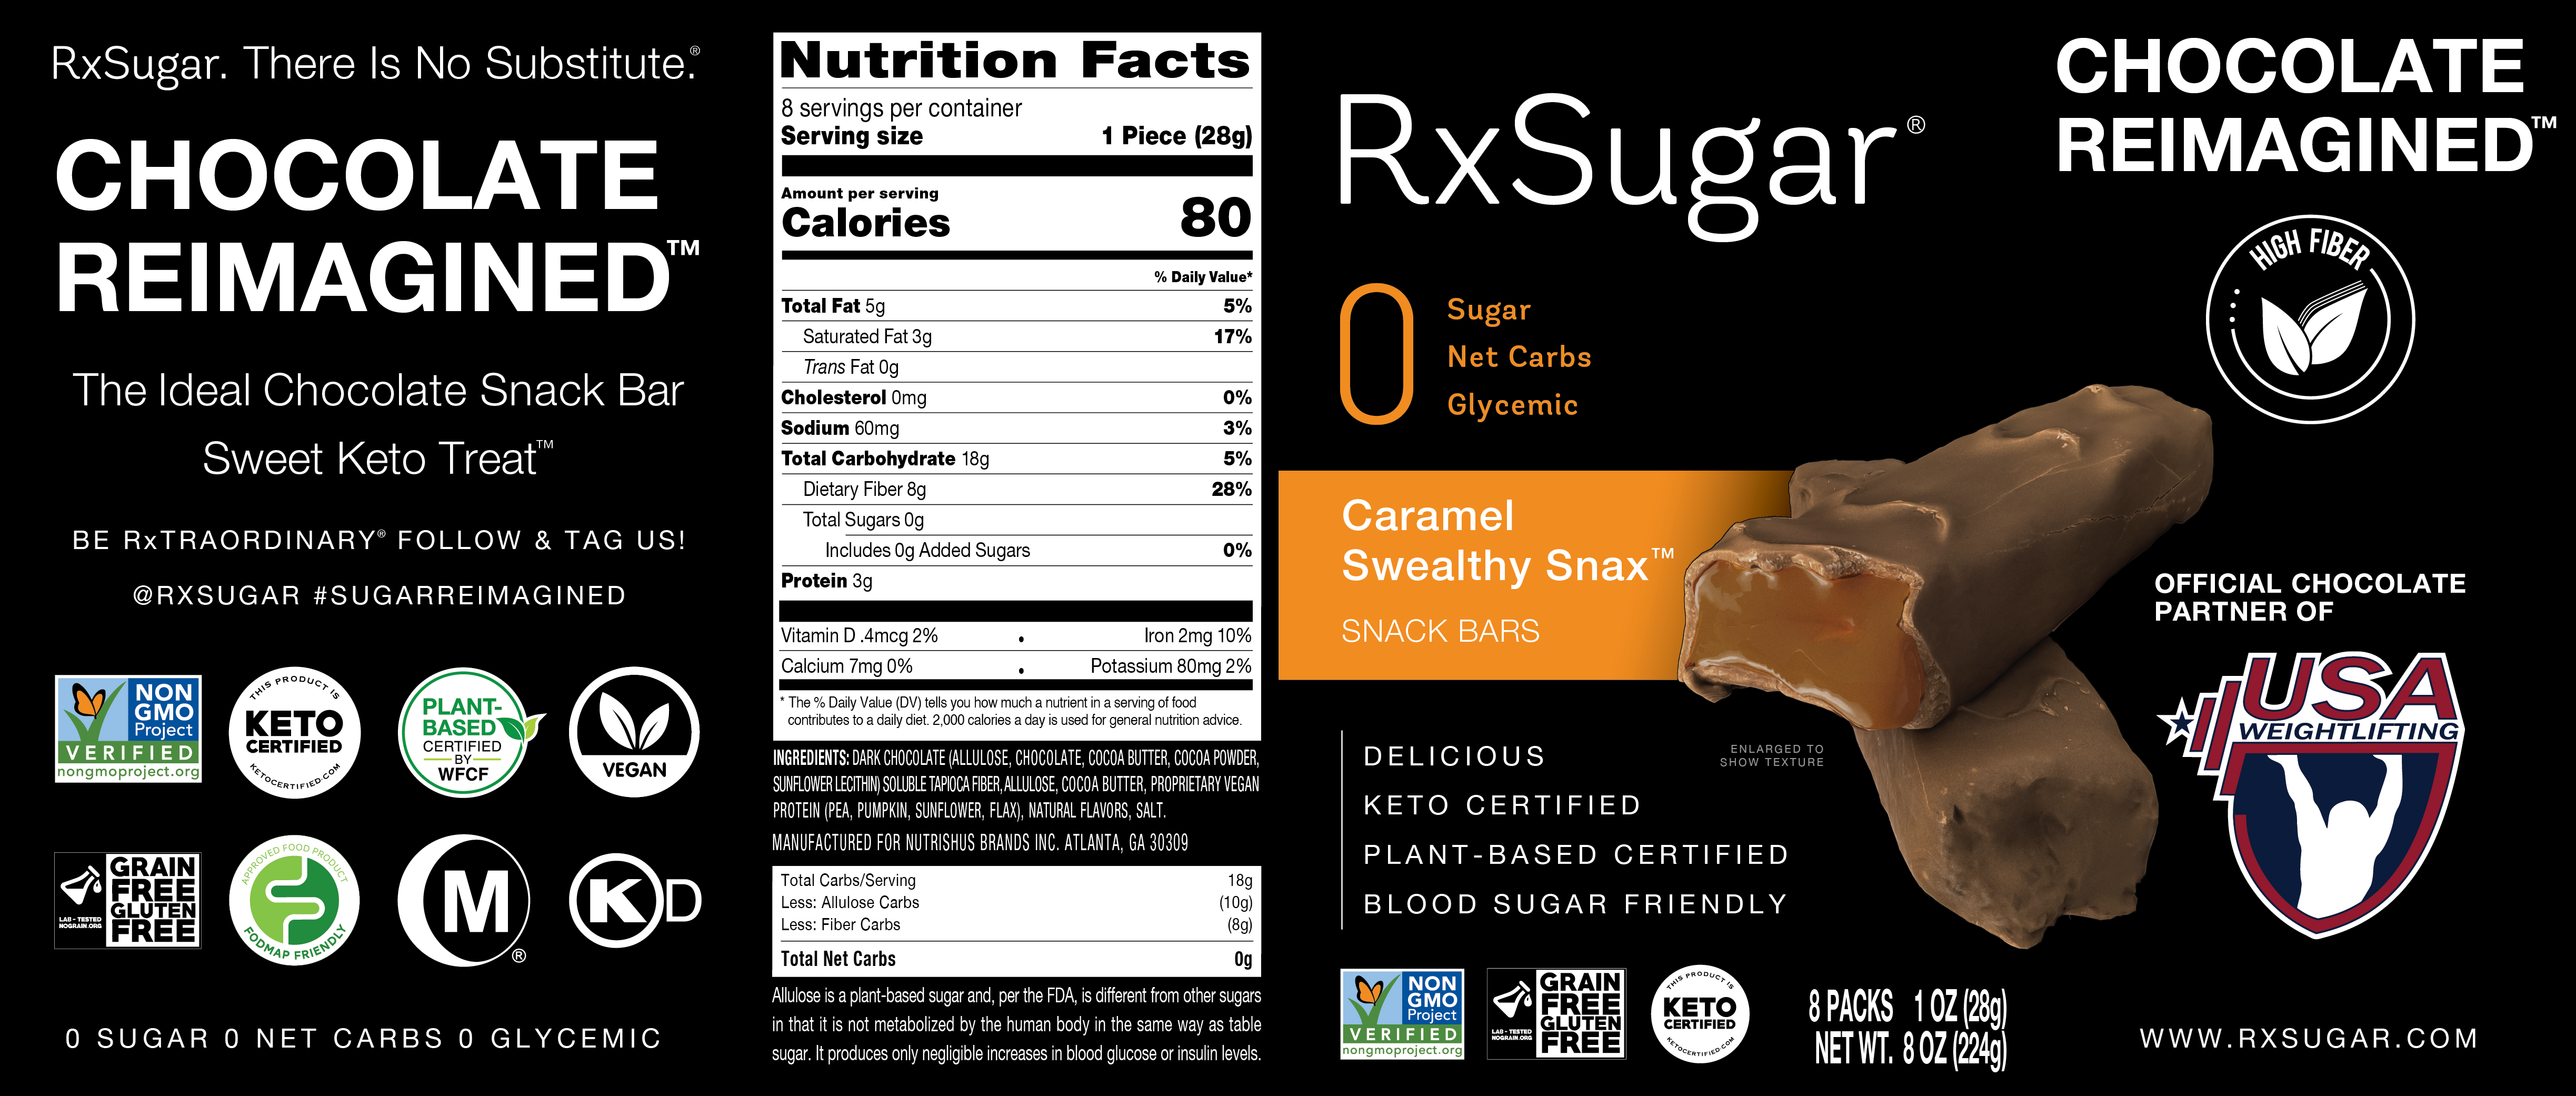 RxSugar Caramel Swealthy Snax 6 units per case 8.0 oz Product Label